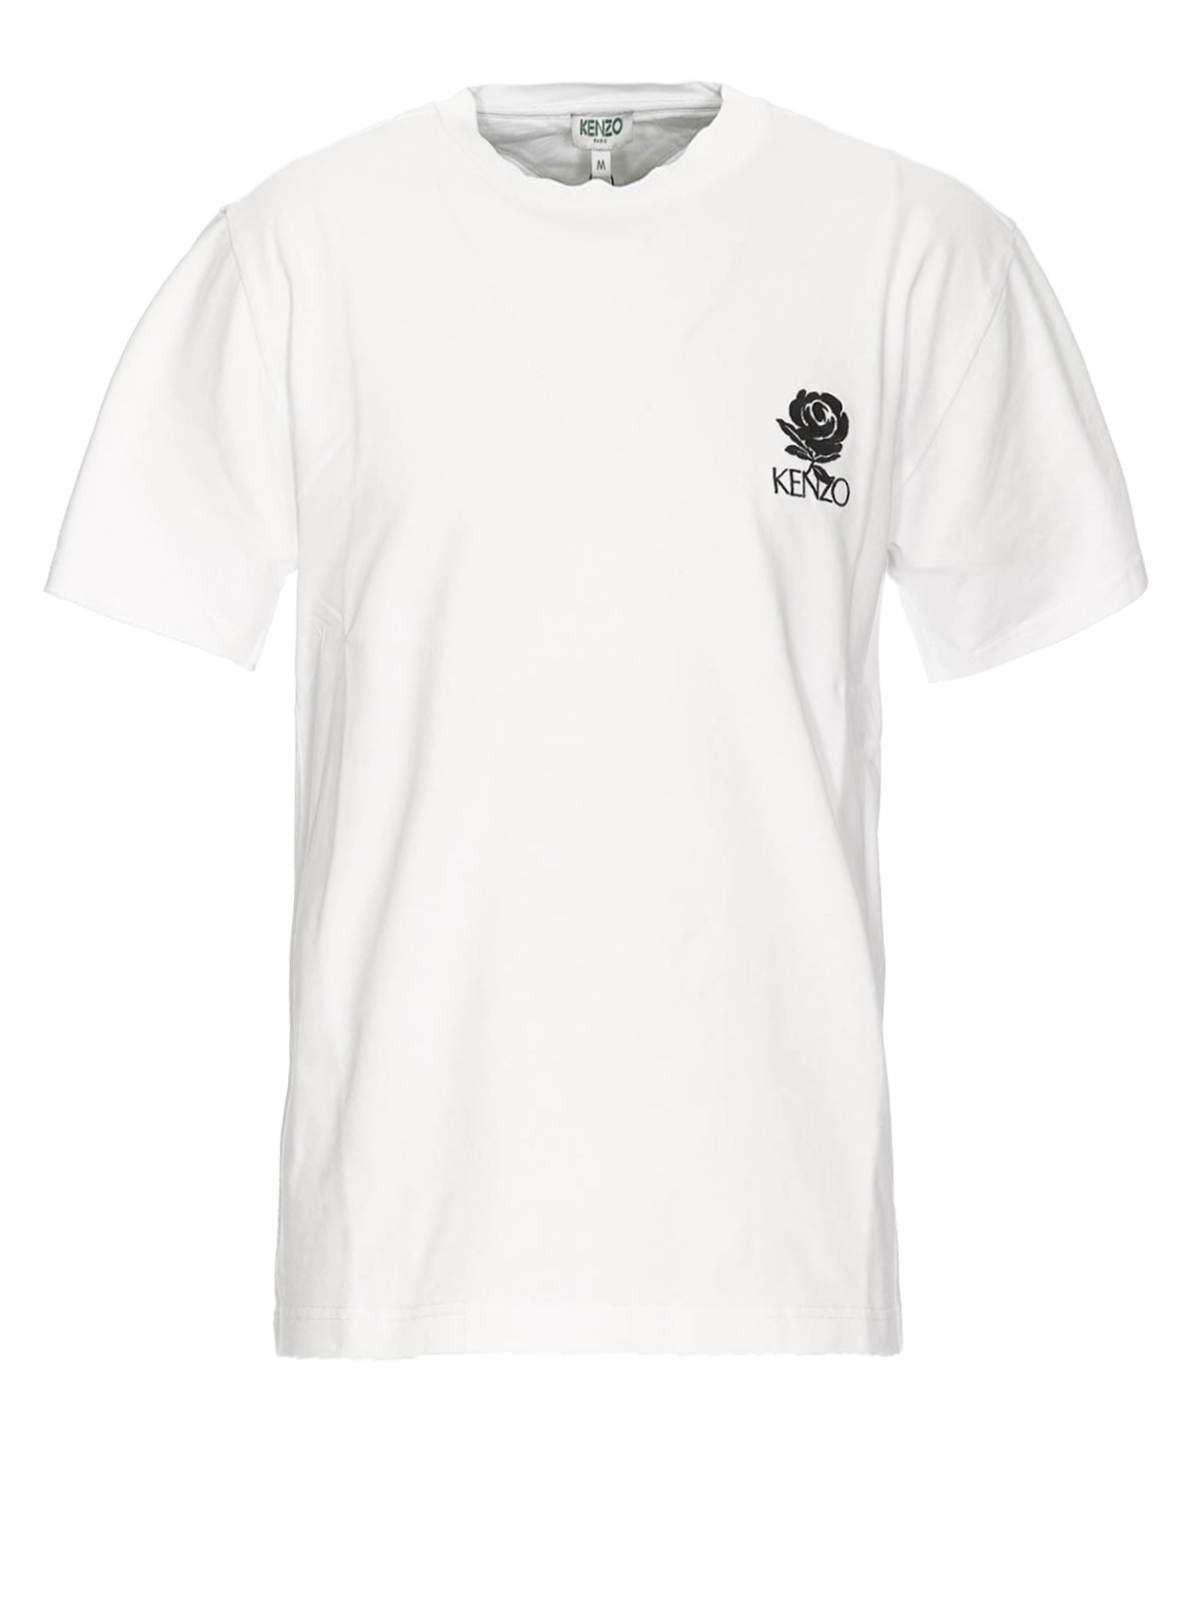 kenzo roses t shirt cheap online